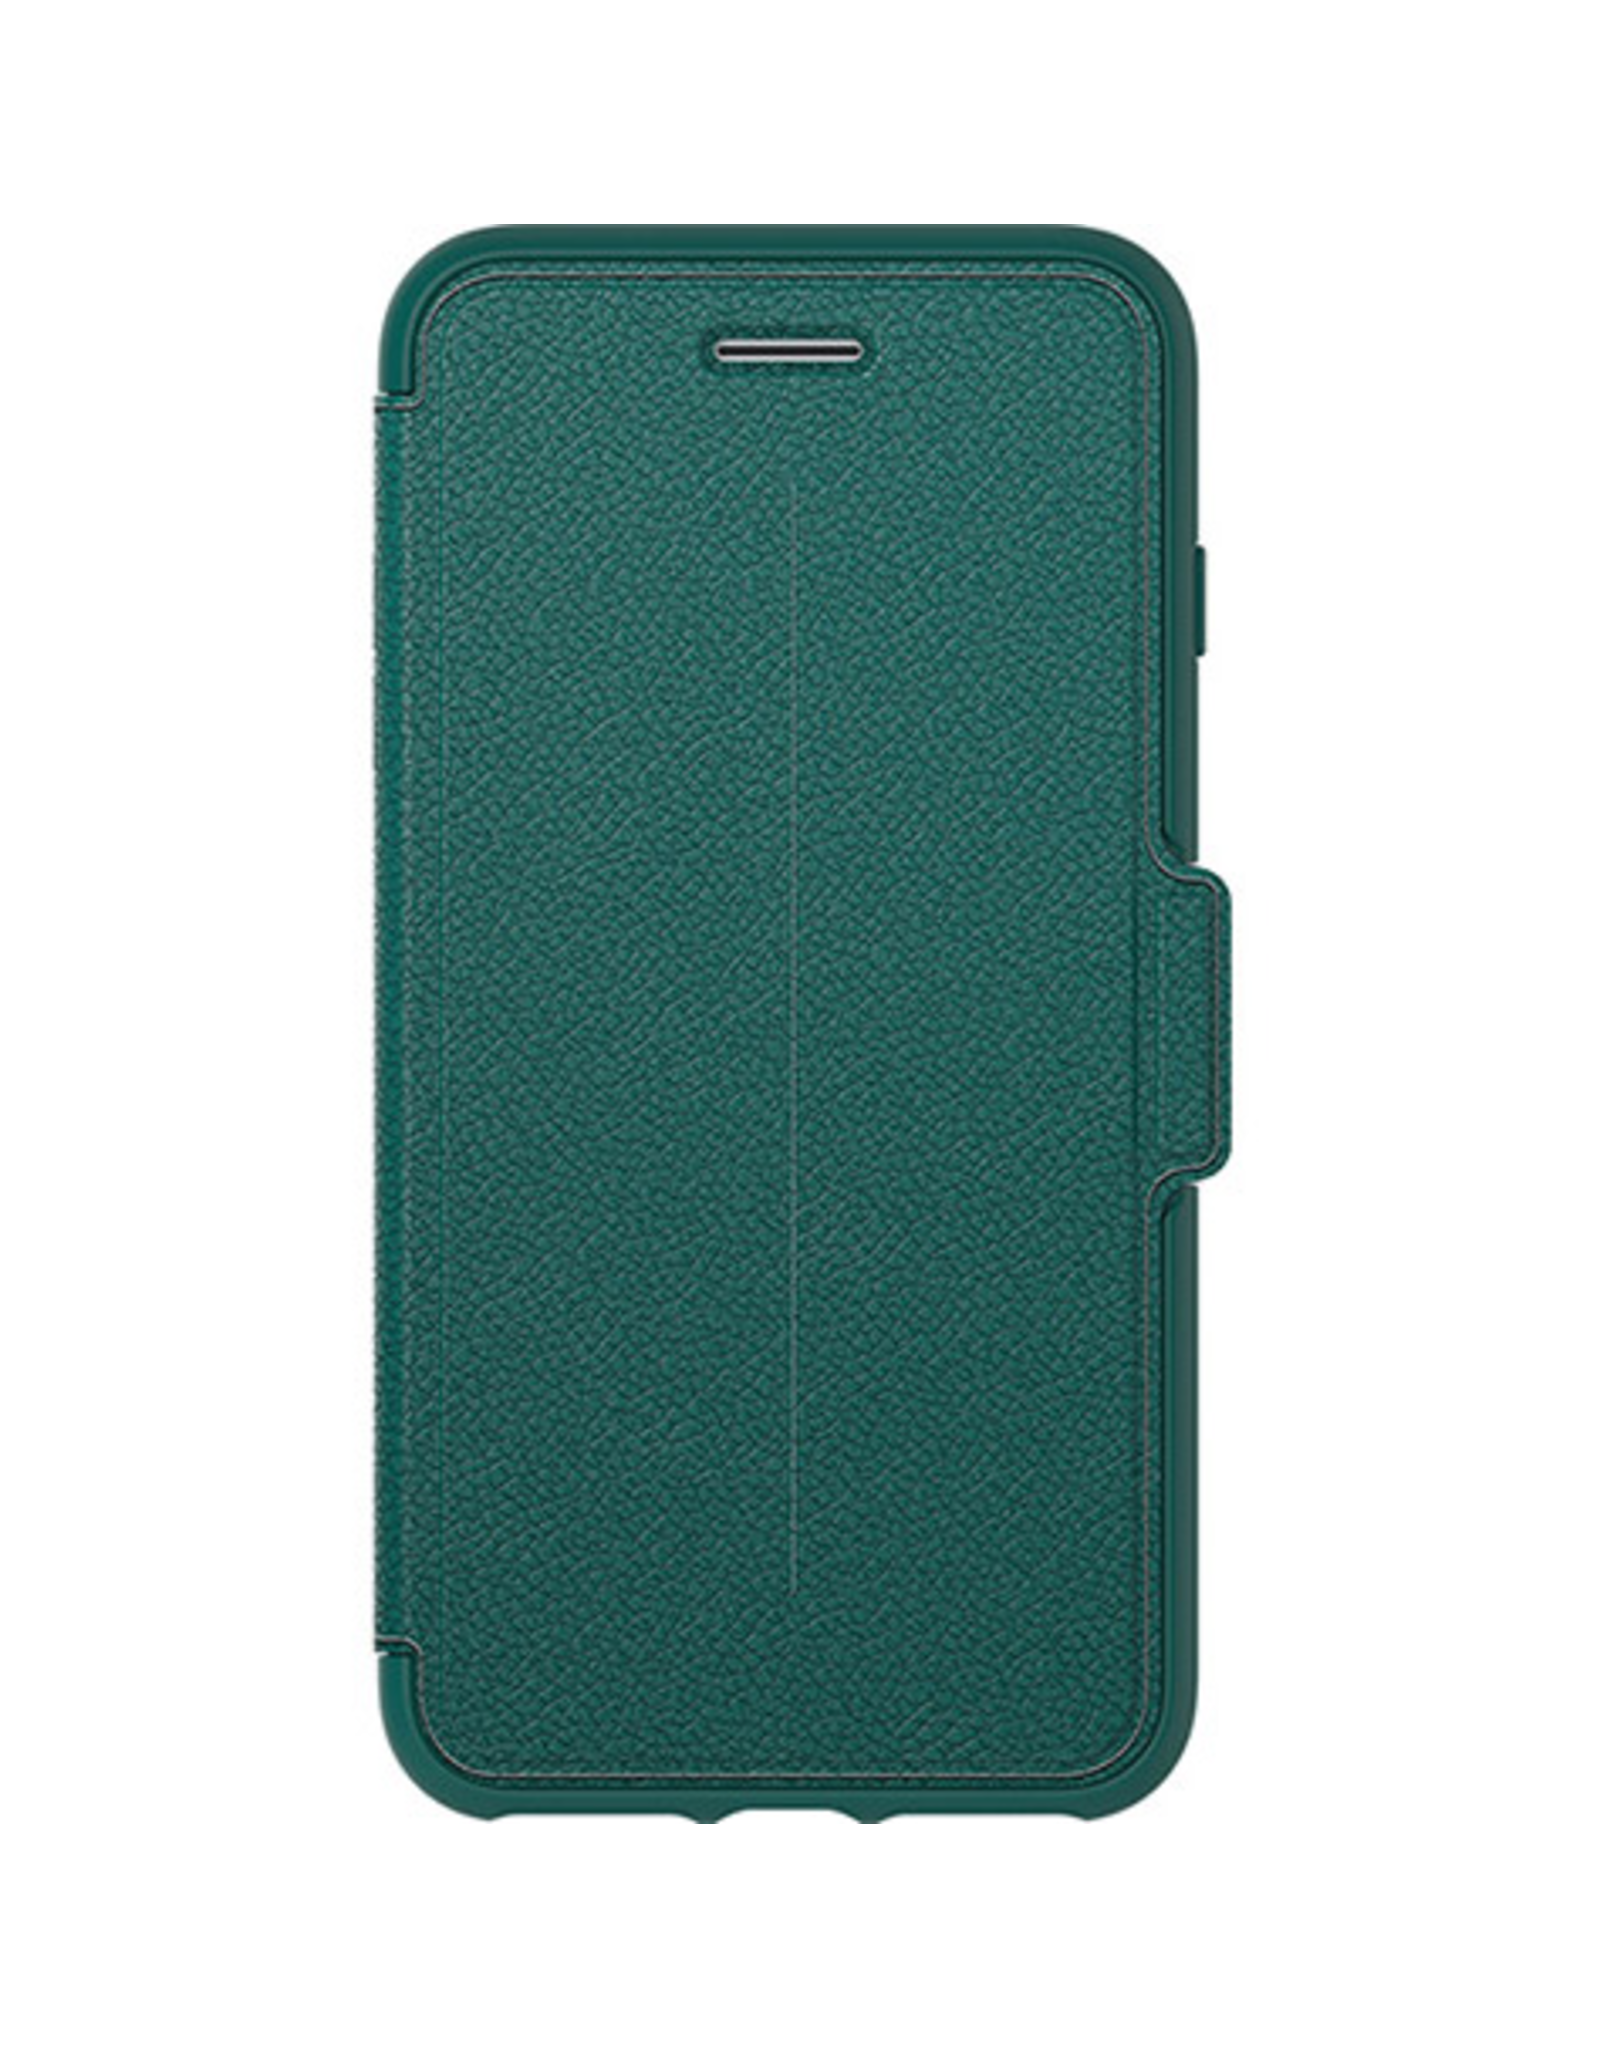 Otterbox OtterBox Strada Case suits iPhone 7 Plus/8 plus - Opal